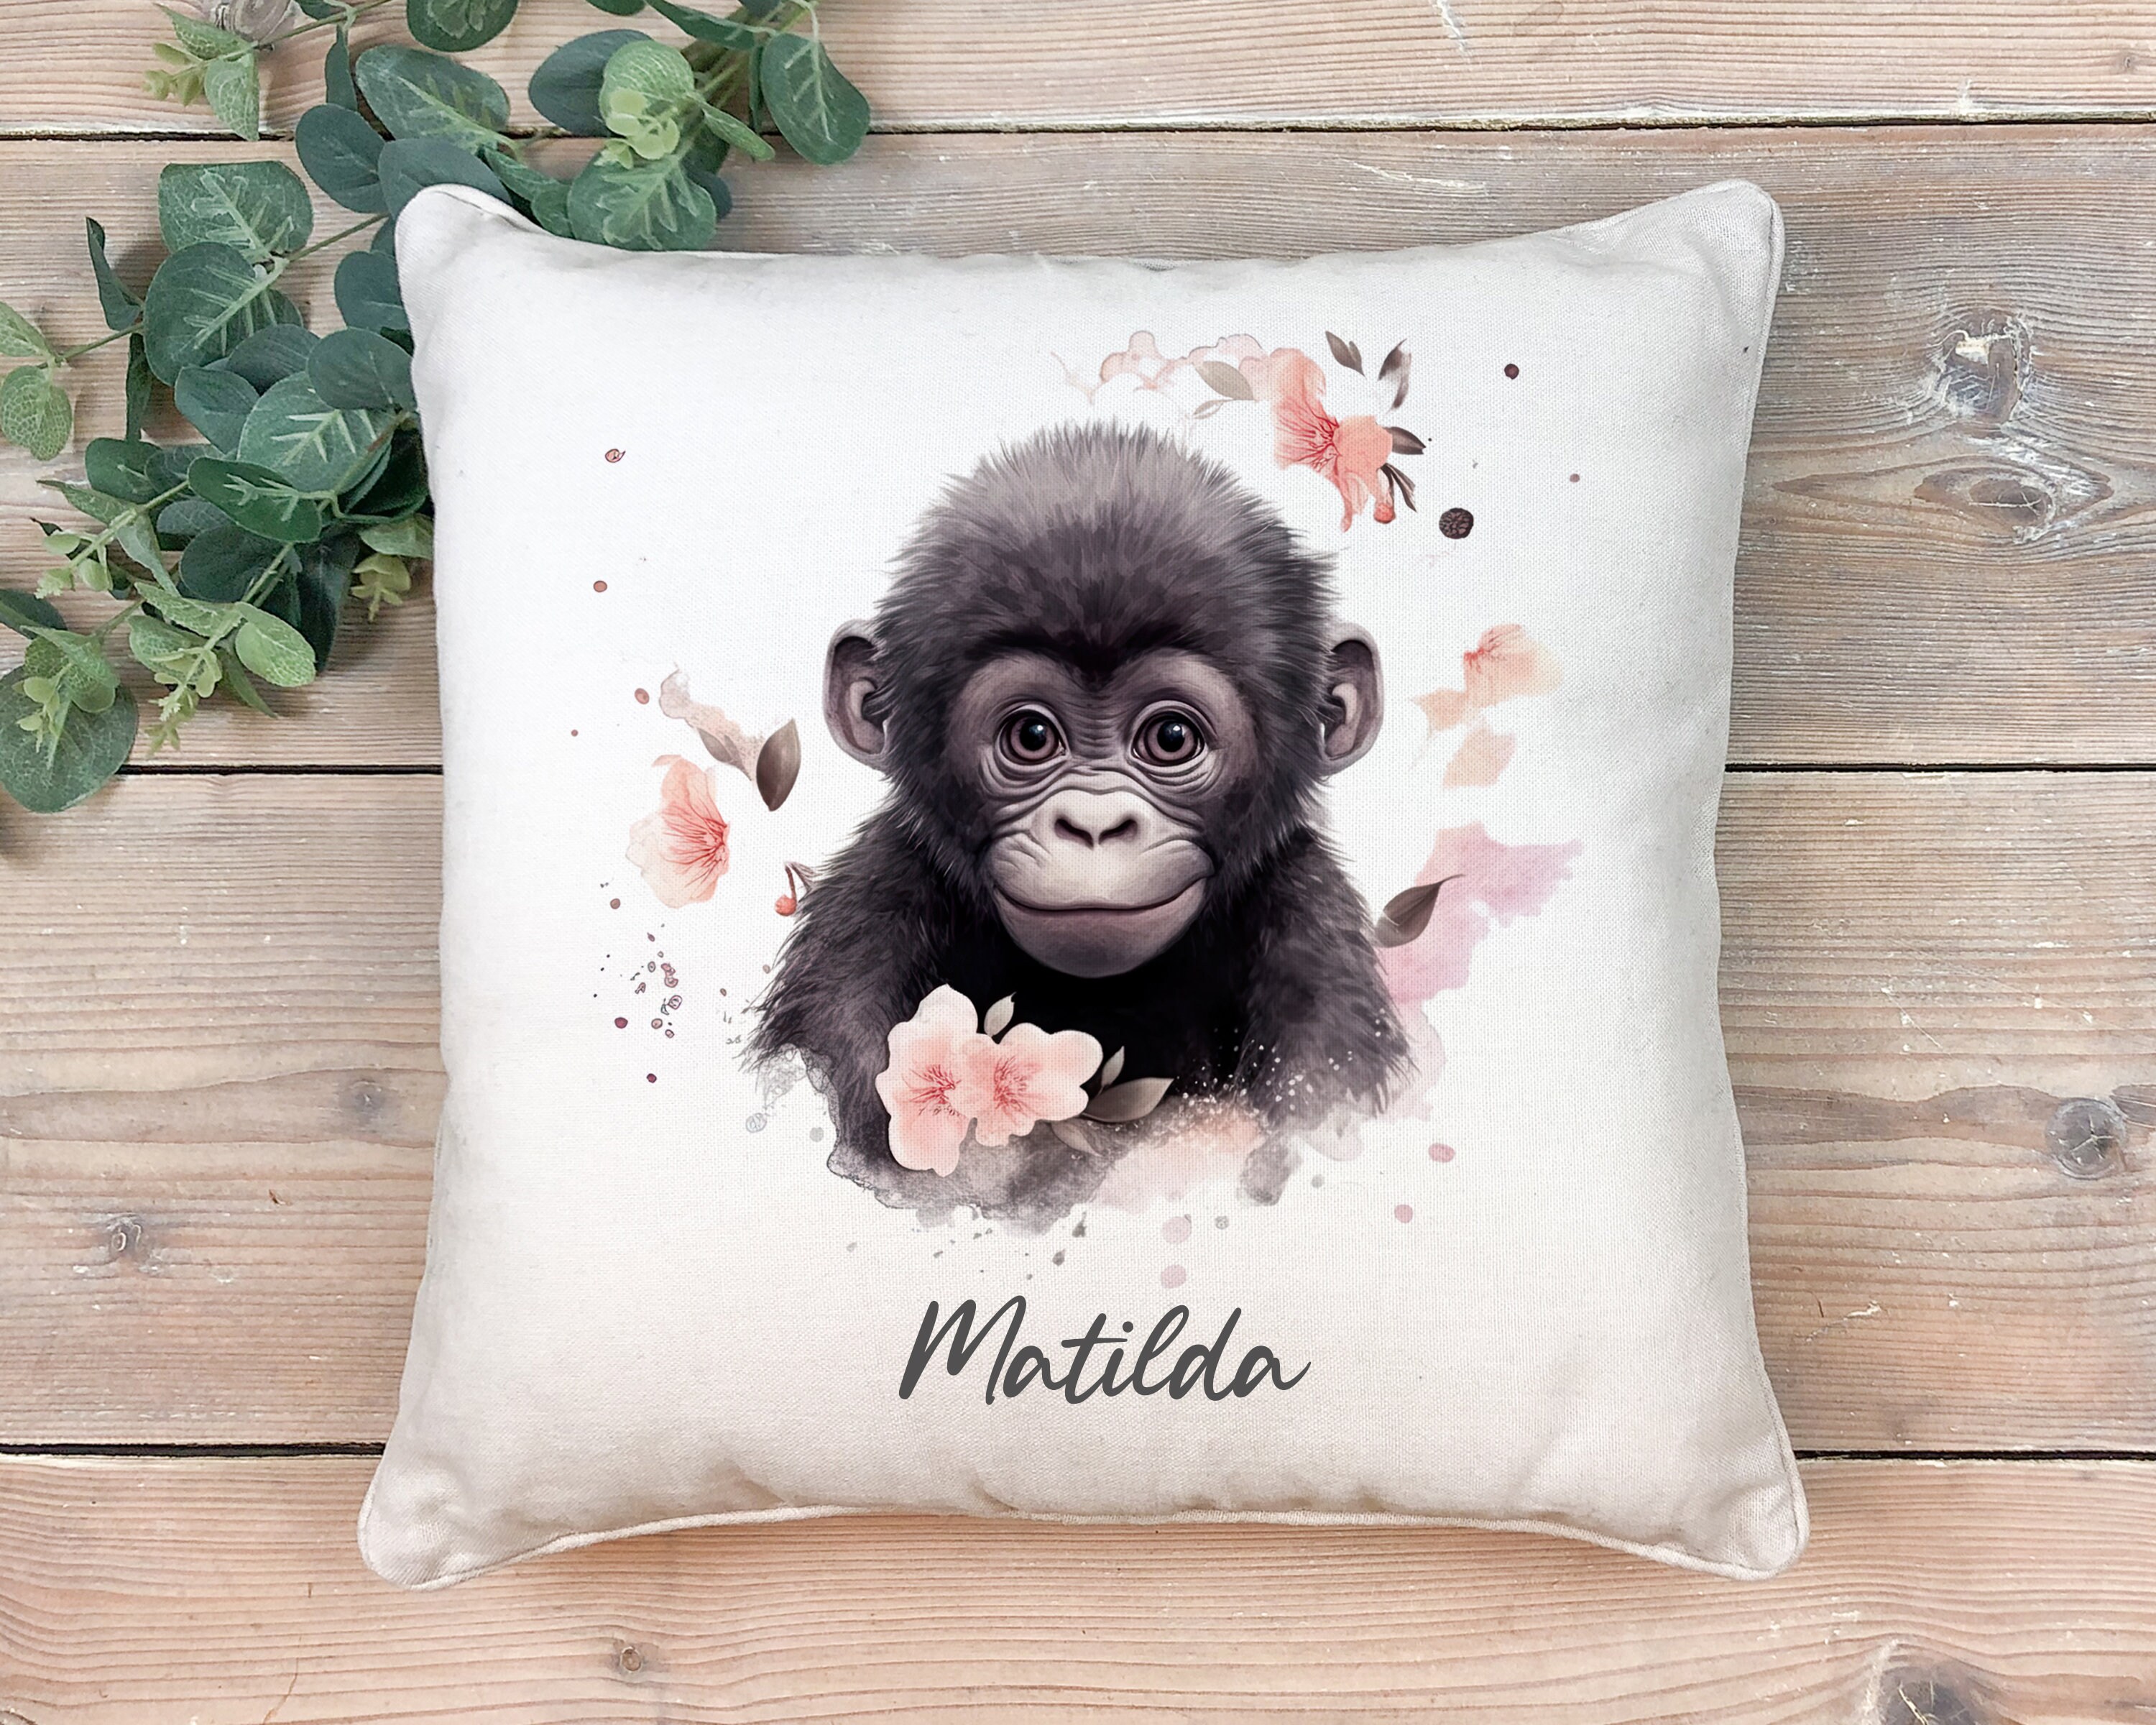 I Just Freaking Love Gorillas, Okay Pillow, Gorilla Pillow, Gorilla Gifts,  Friend Pillow, Friend Gift. 